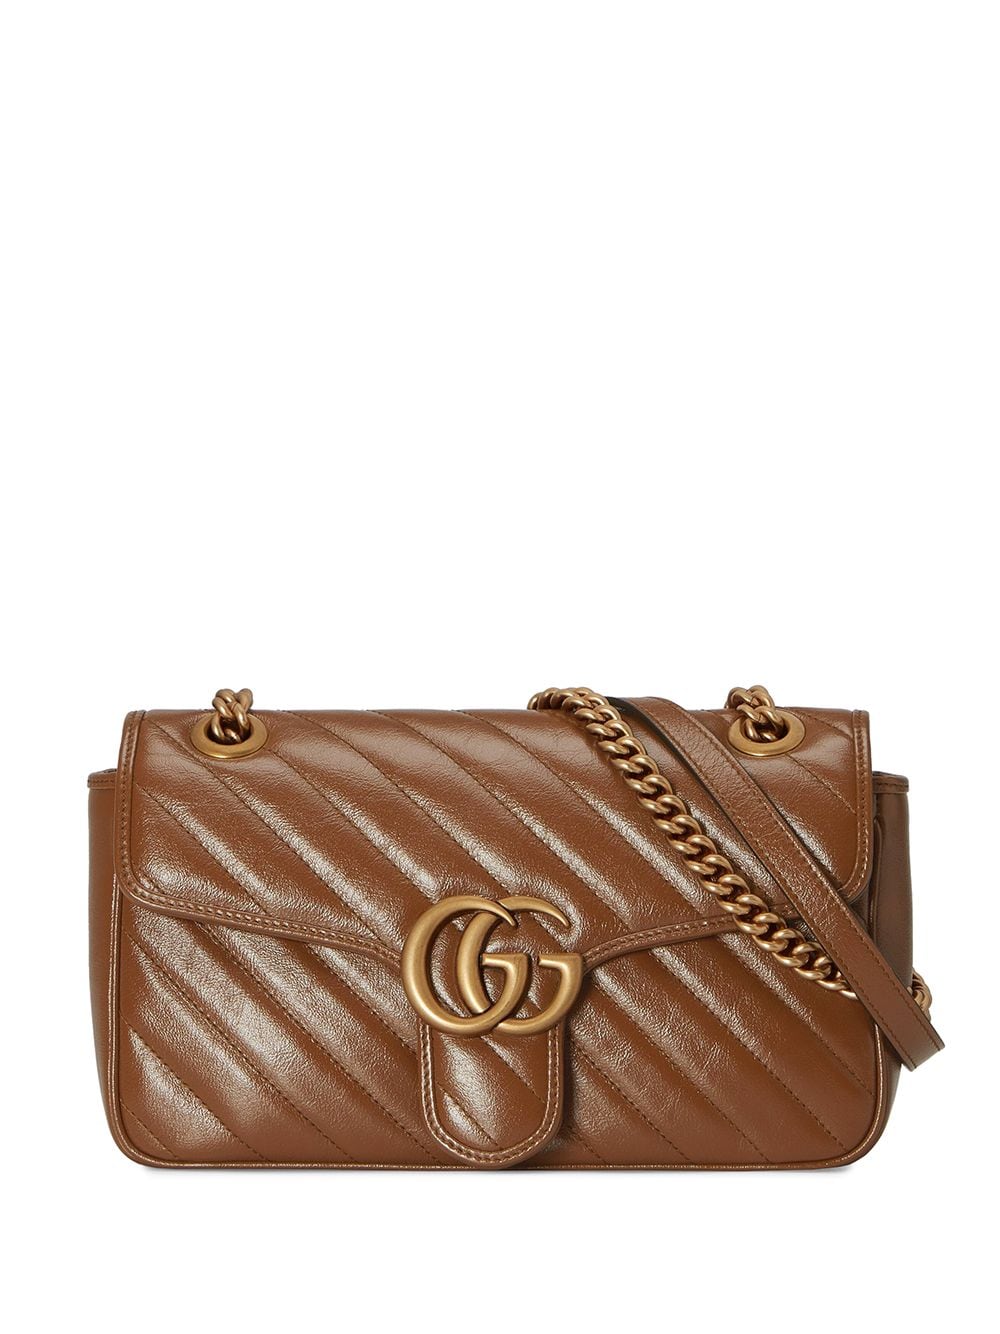 Gucci Pink Leather Marmont Matelassé Shoulder Bag Small QFB1BILTPH006